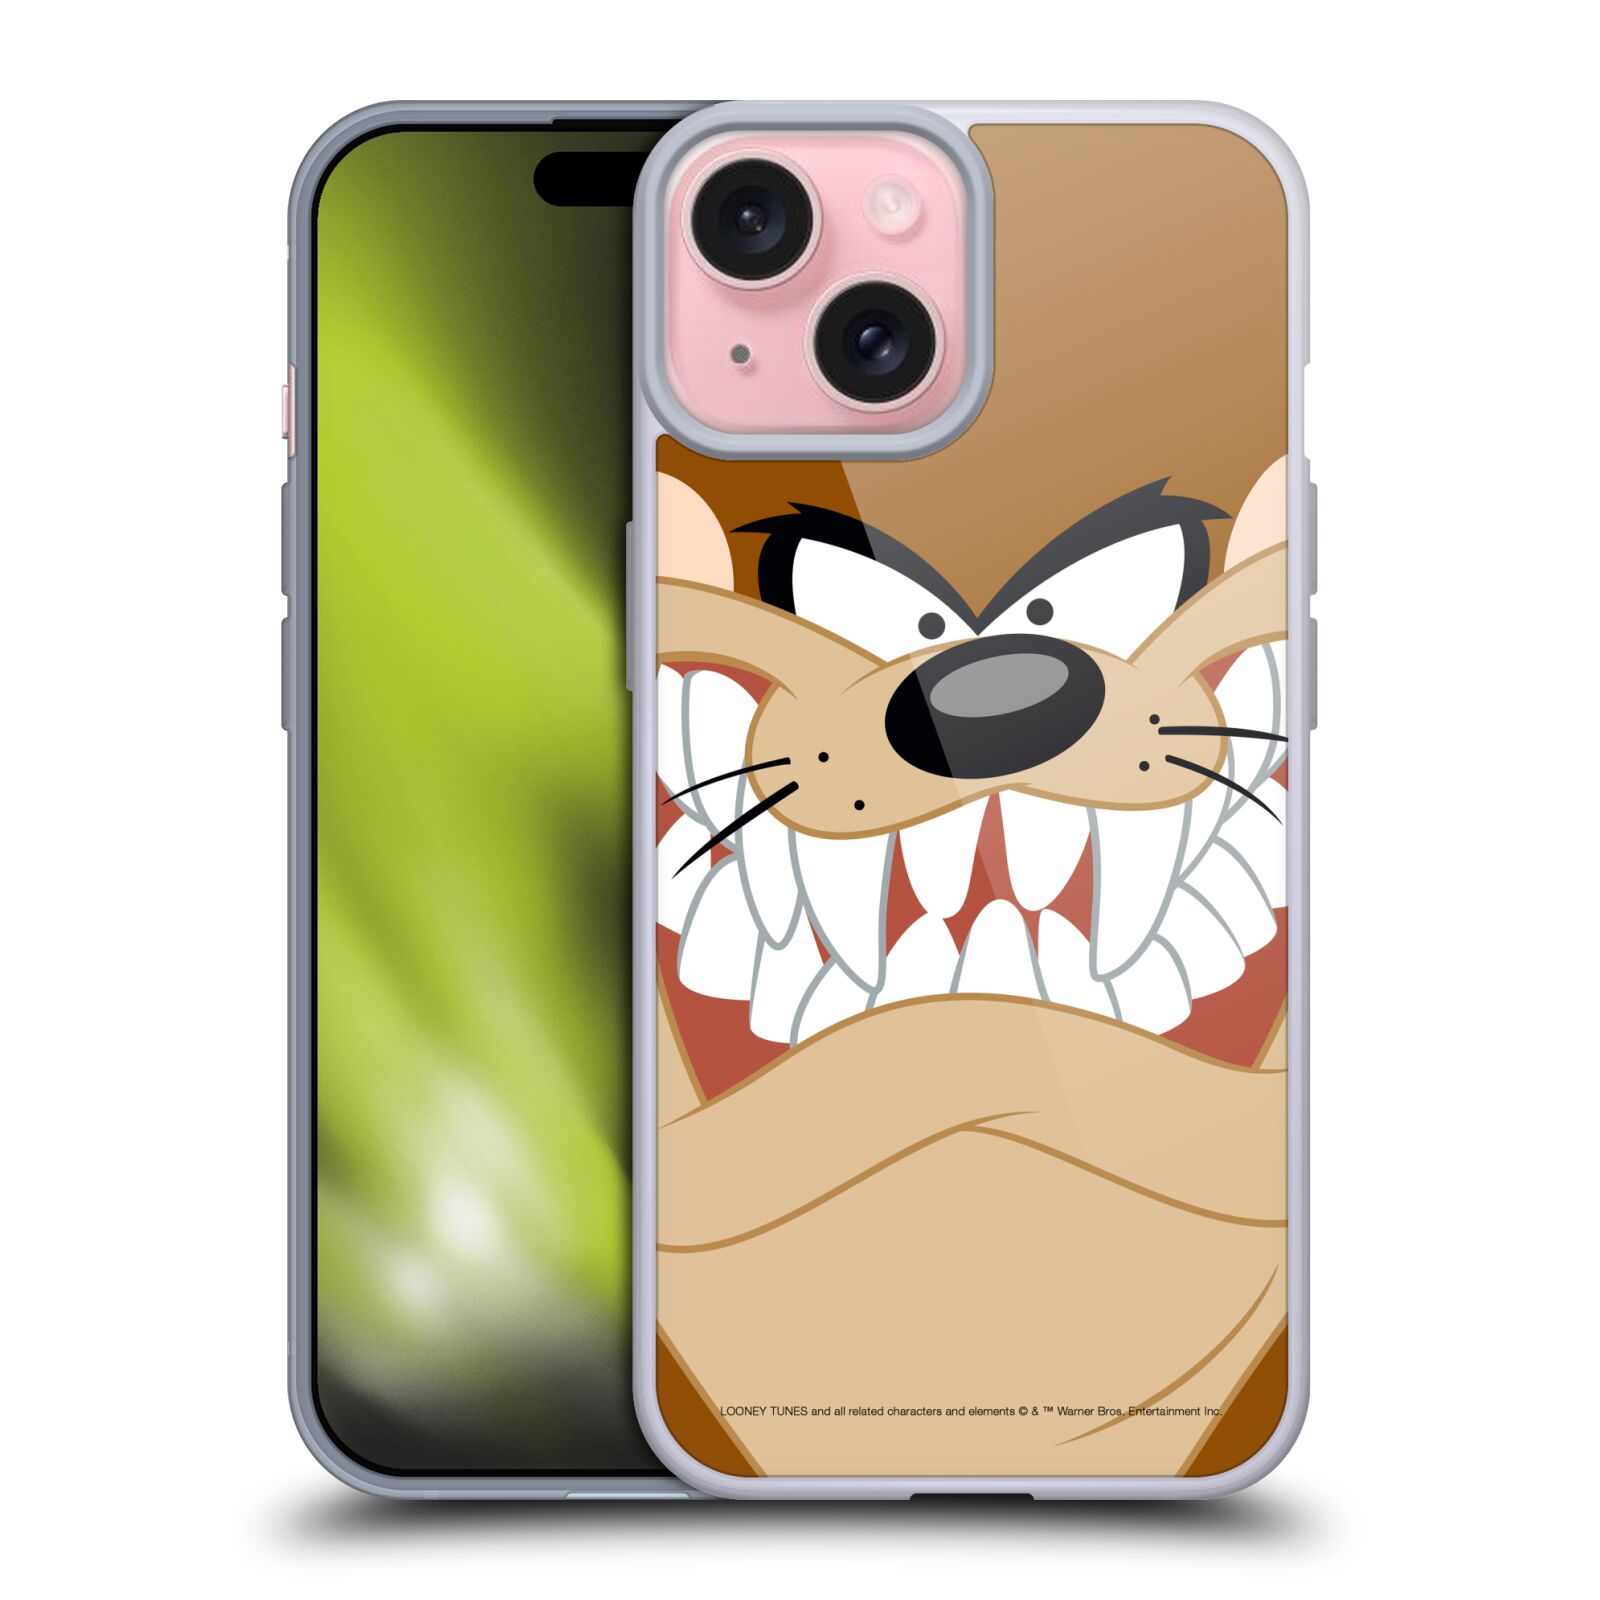 Silikonové lesklé pouzdro na mobil Apple iPhone 15 - Looney Tunes - Tasmanian Devil - Tasmánský Čert (Silikonový lesklý kryt, obal, pouzdro na mobilní telefon Apple iPhone 15 s licencovaným motivem Looney Tunes - Tasmanian Devil - Tasmánský Čert)